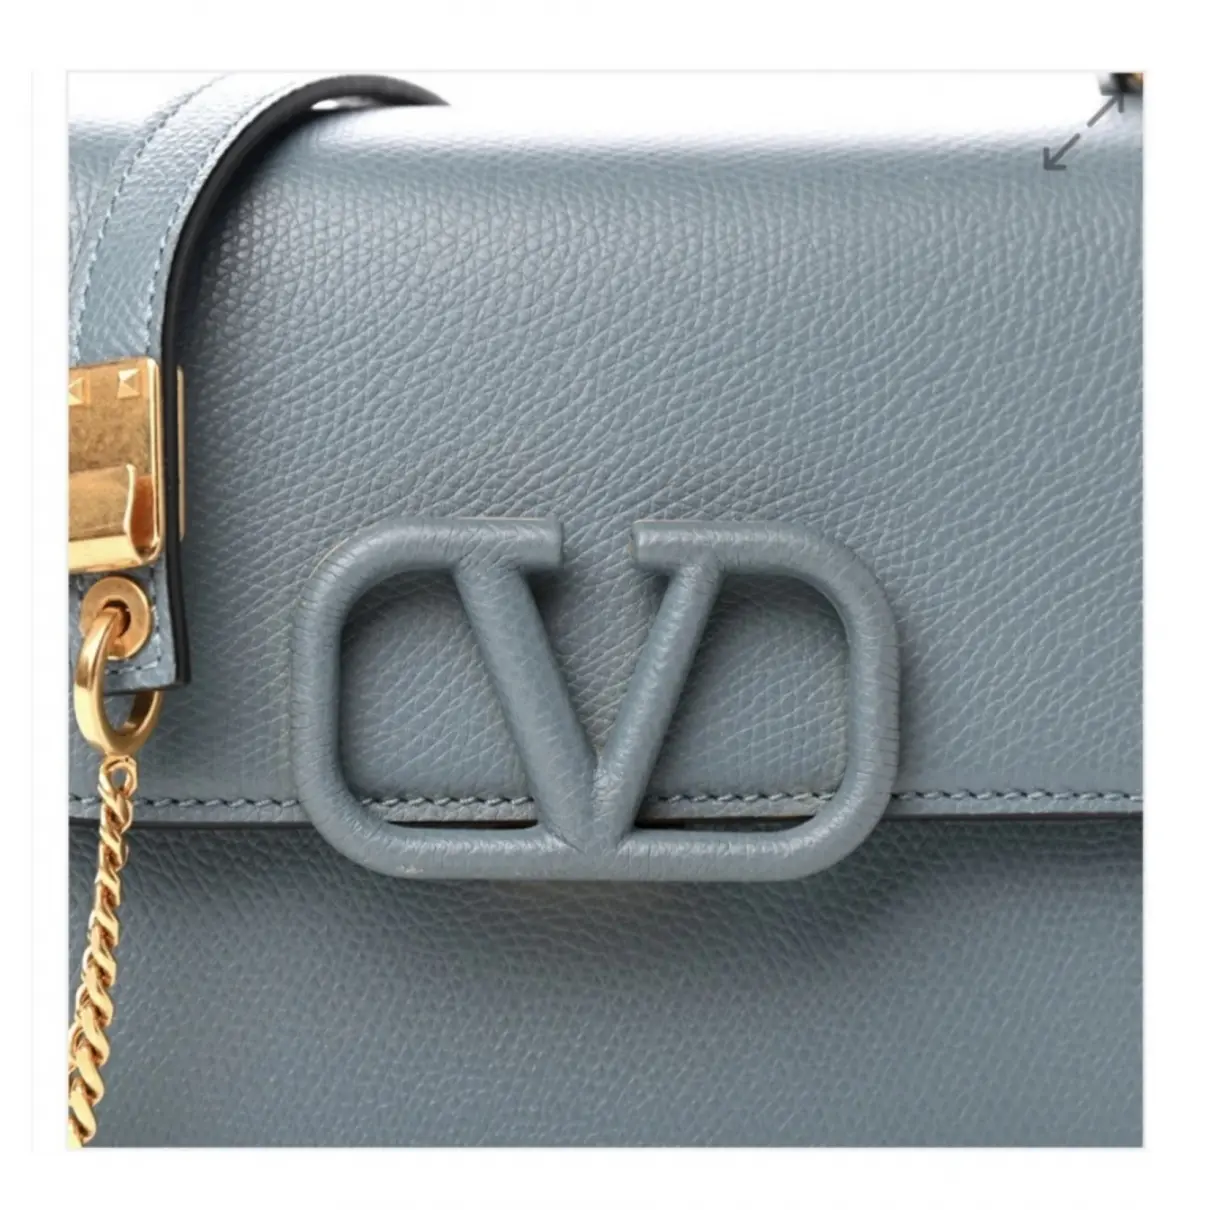 Buy Valentino Garavani Vsling leather crossbody bag online